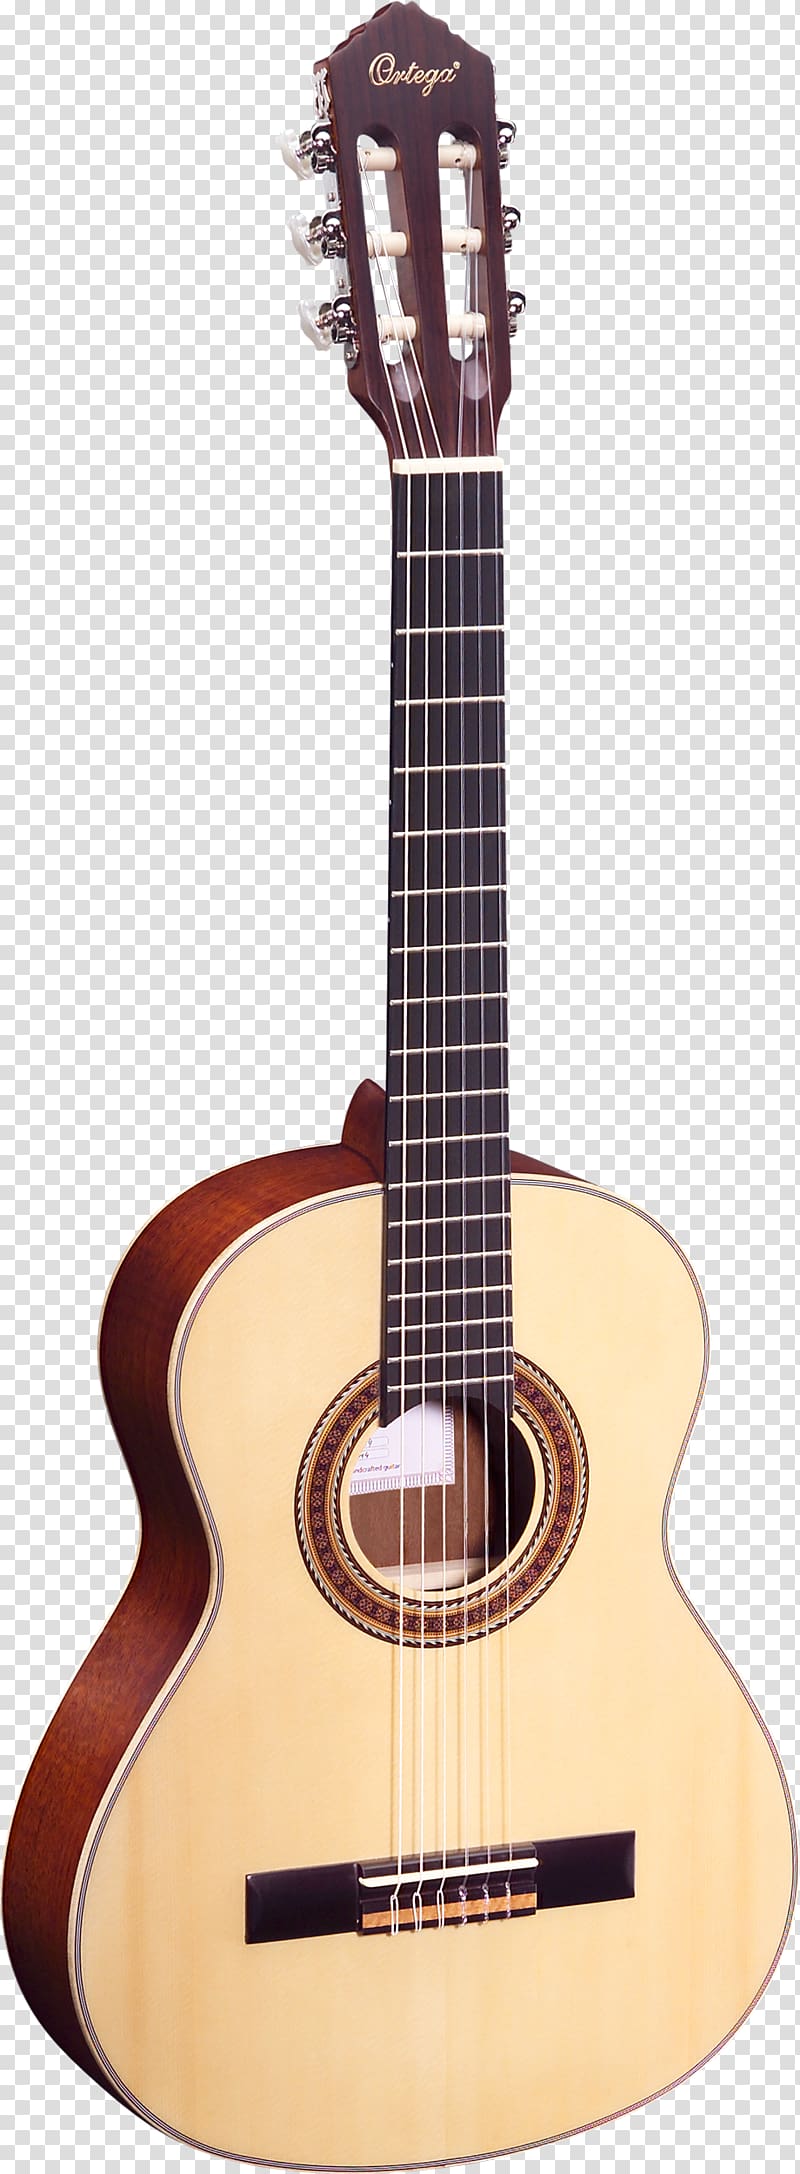 Twelve-string guitar Steel-string acoustic guitar Acoustic-electric guitar Musical Instruments, amancio ortega transparent background PNG clipart